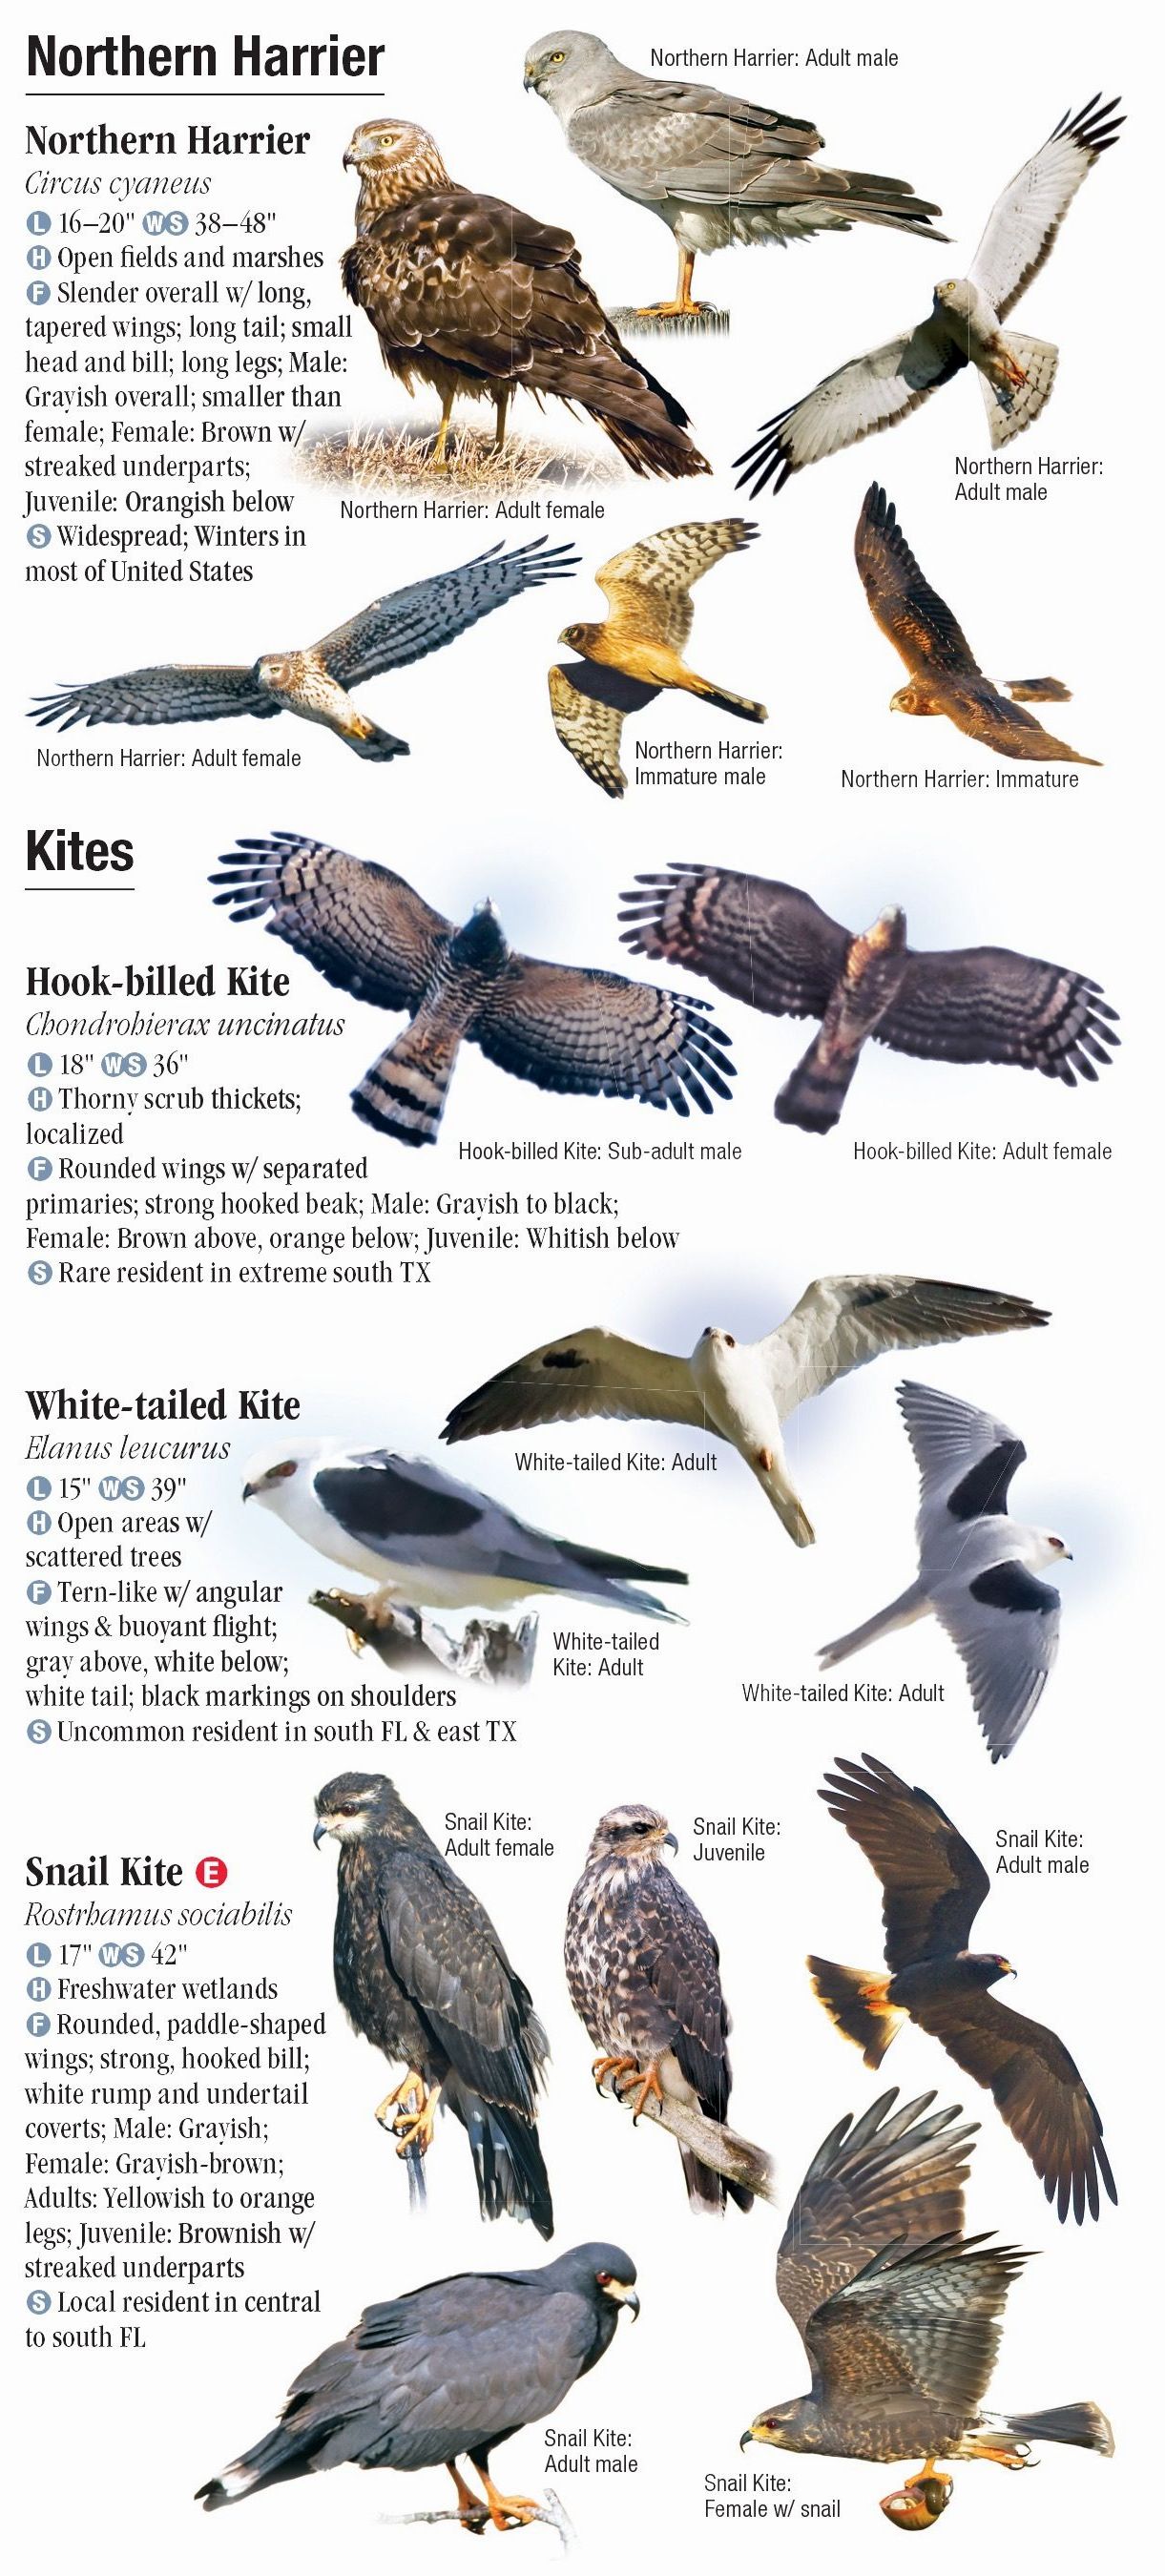 A List Of Birds Of Prey Or Raptors - WorldAtlas